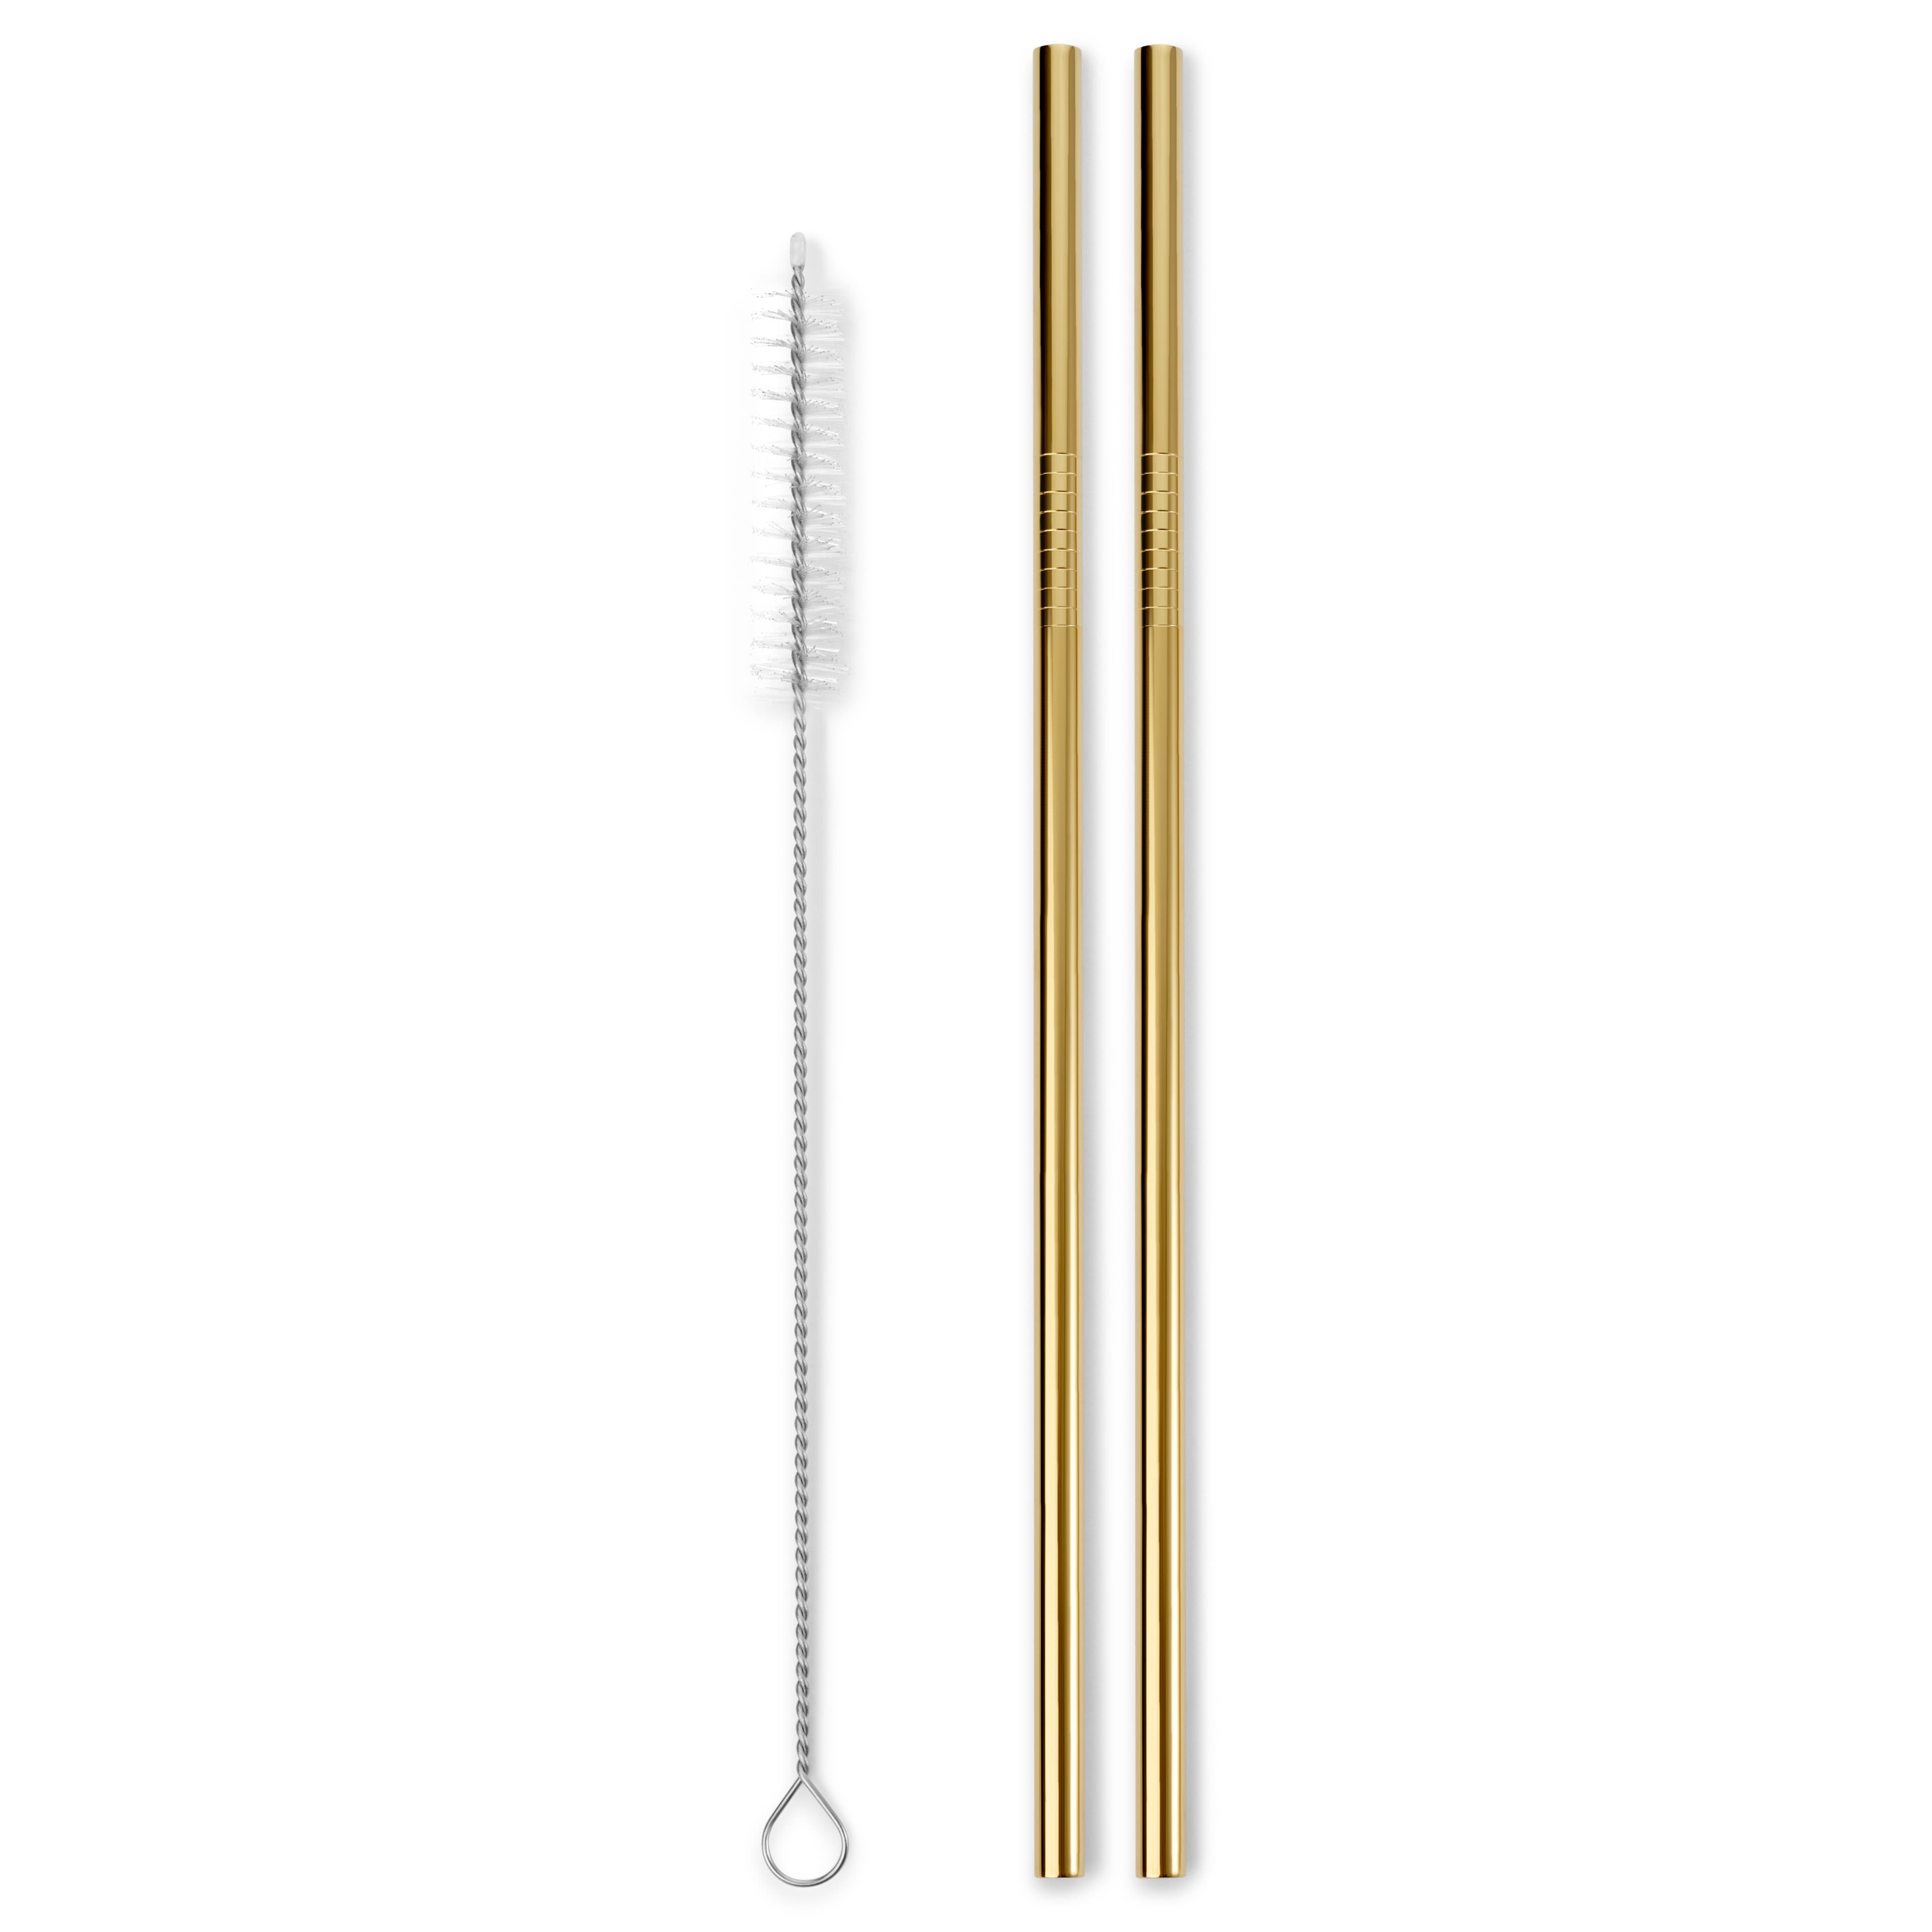 Dishwasher-Safe Gold-Tone Stainless Steel Straws | Set of 2